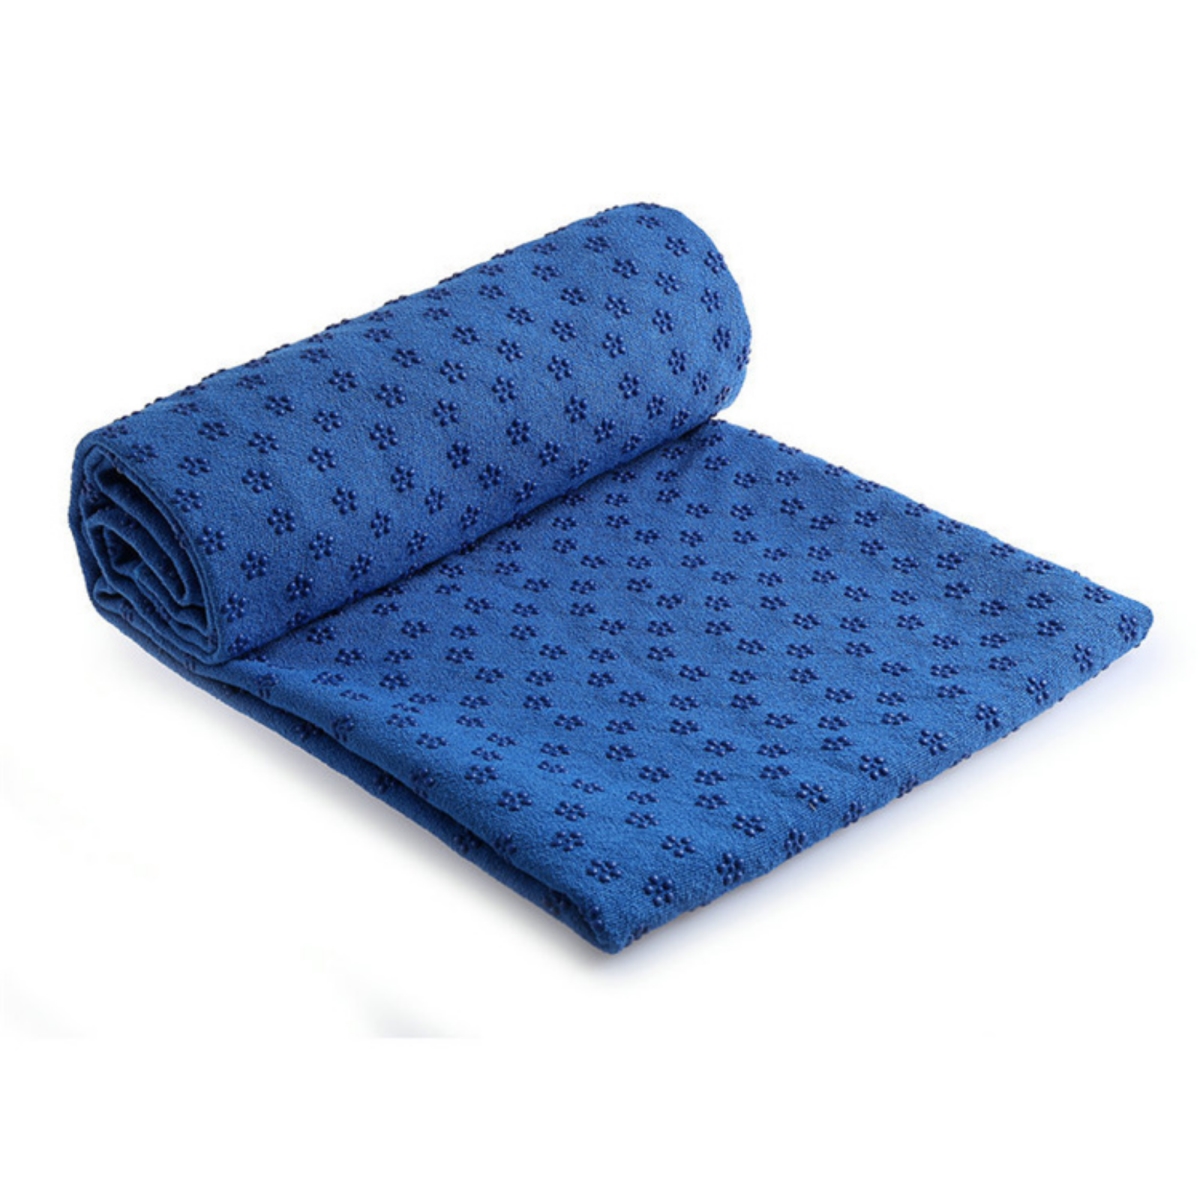 Picture of JupiterGear JG-YOGATWL-SOLID-DRKBLU Premium Absorption Hot Yoga Mat Towel with Slip-Resistant Grip Dots - Dark Blue